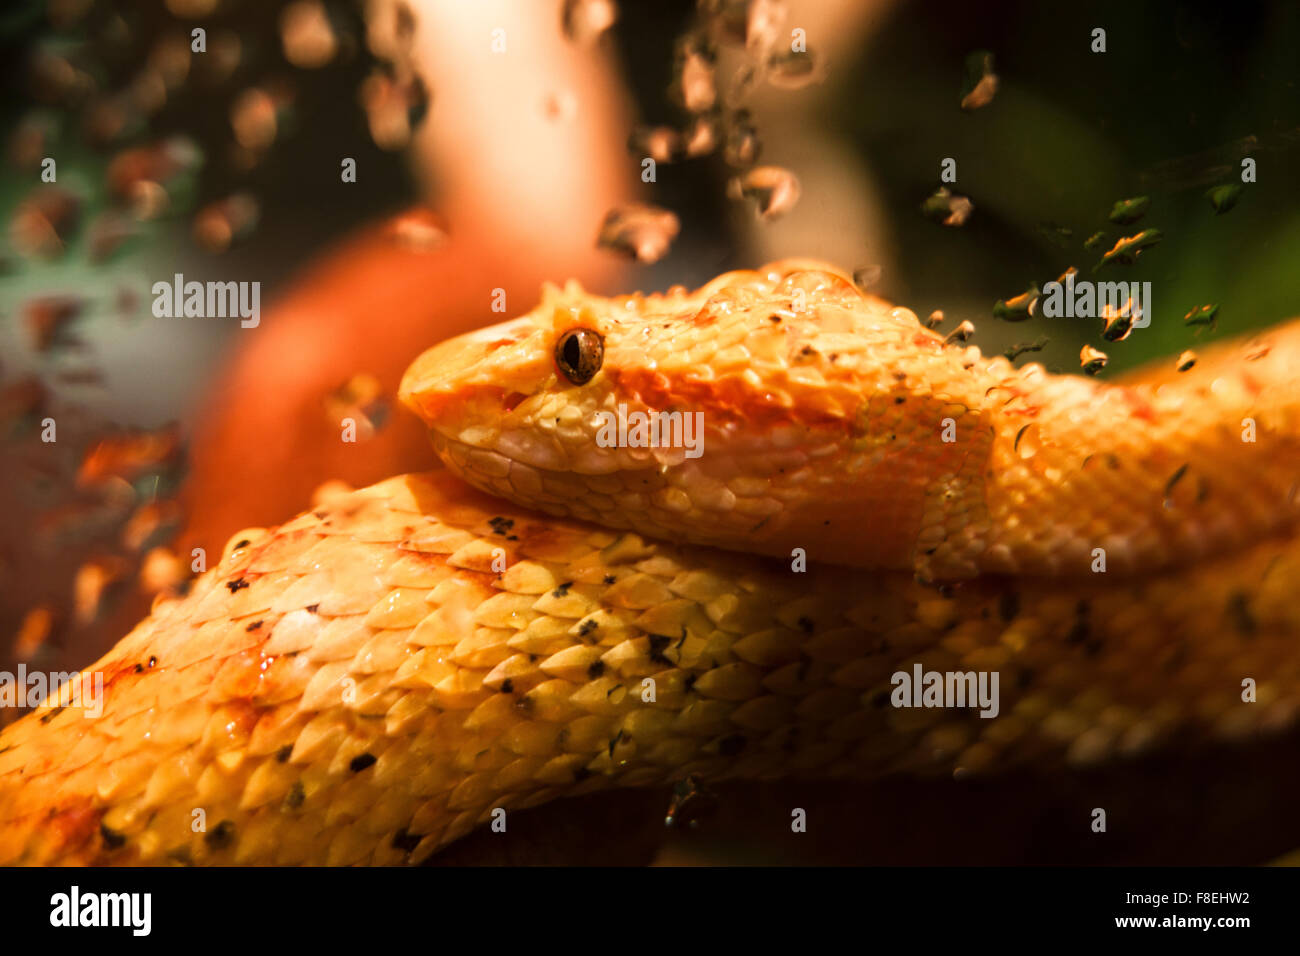 close shot of an orange snake inside a terrarium Stock Photo